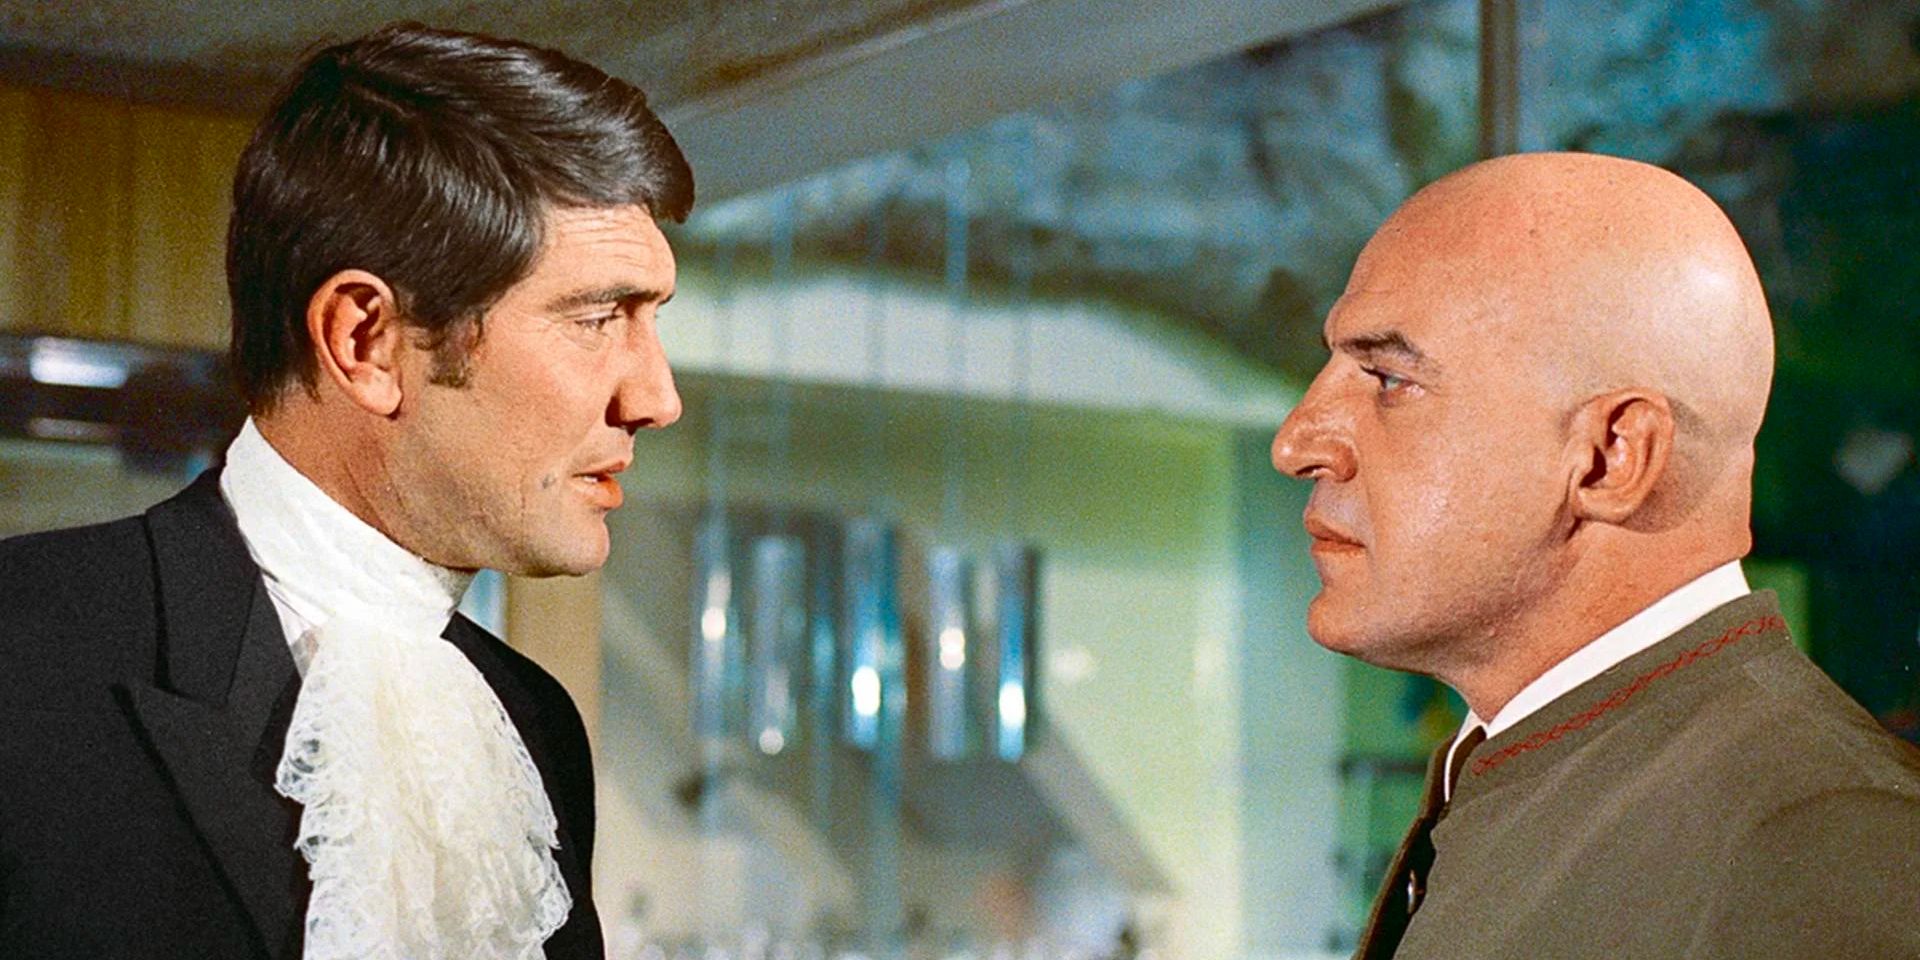 James Bond confronts Ernst Blofeld.